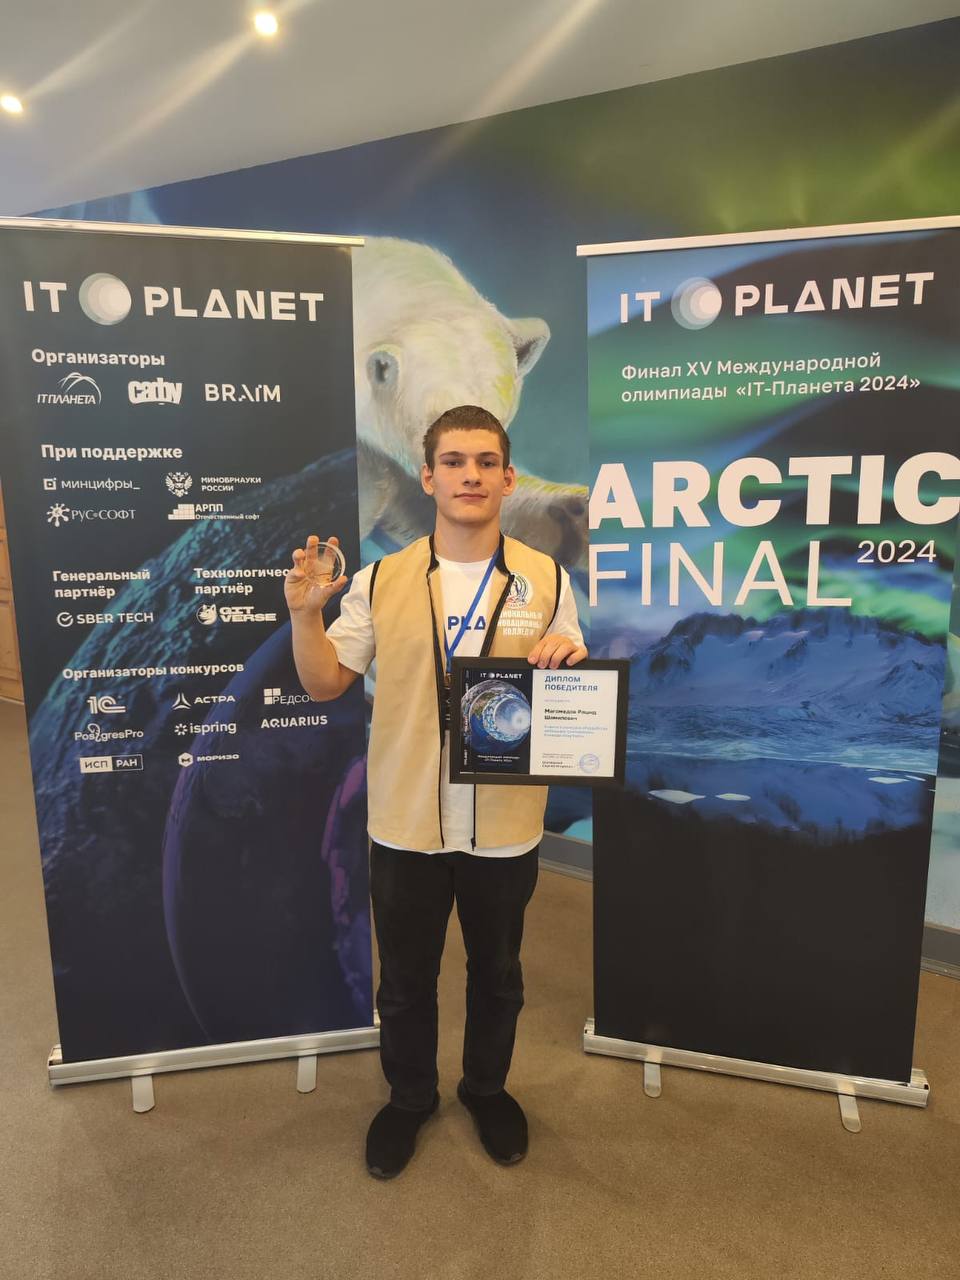 Студент 2 курса(ИСП) Рашид Магомедов занял 3 место в финале международной олимпиады «IT-Планета»